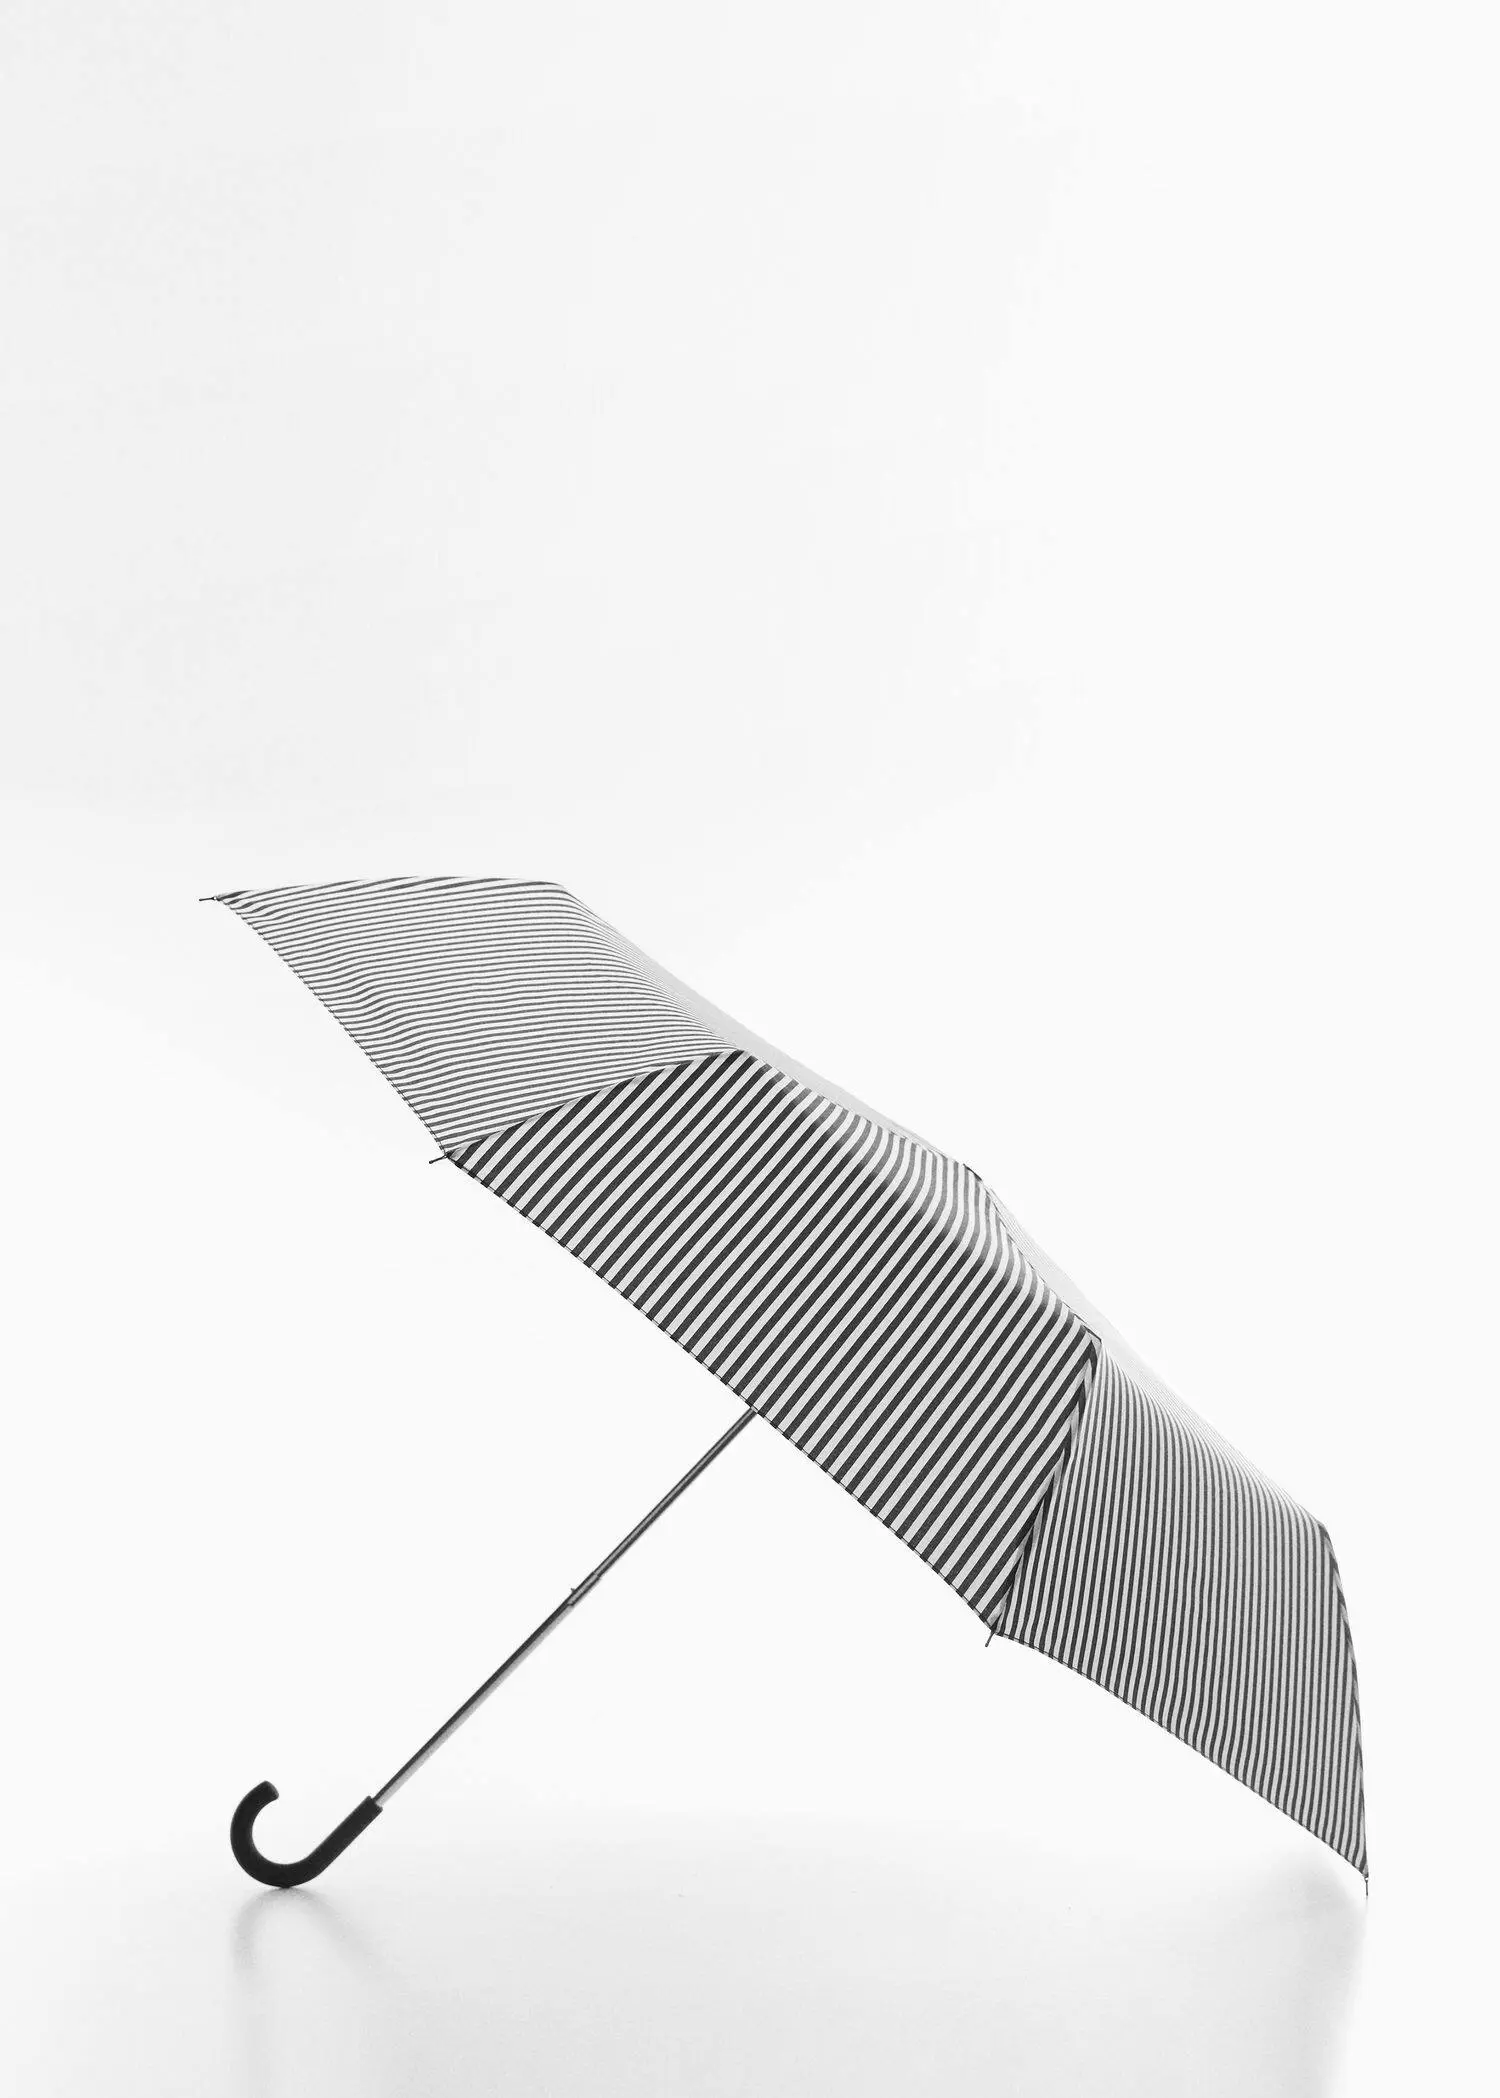 Mango Striped folding umbrella. an open umbrella with black and white stripes. 